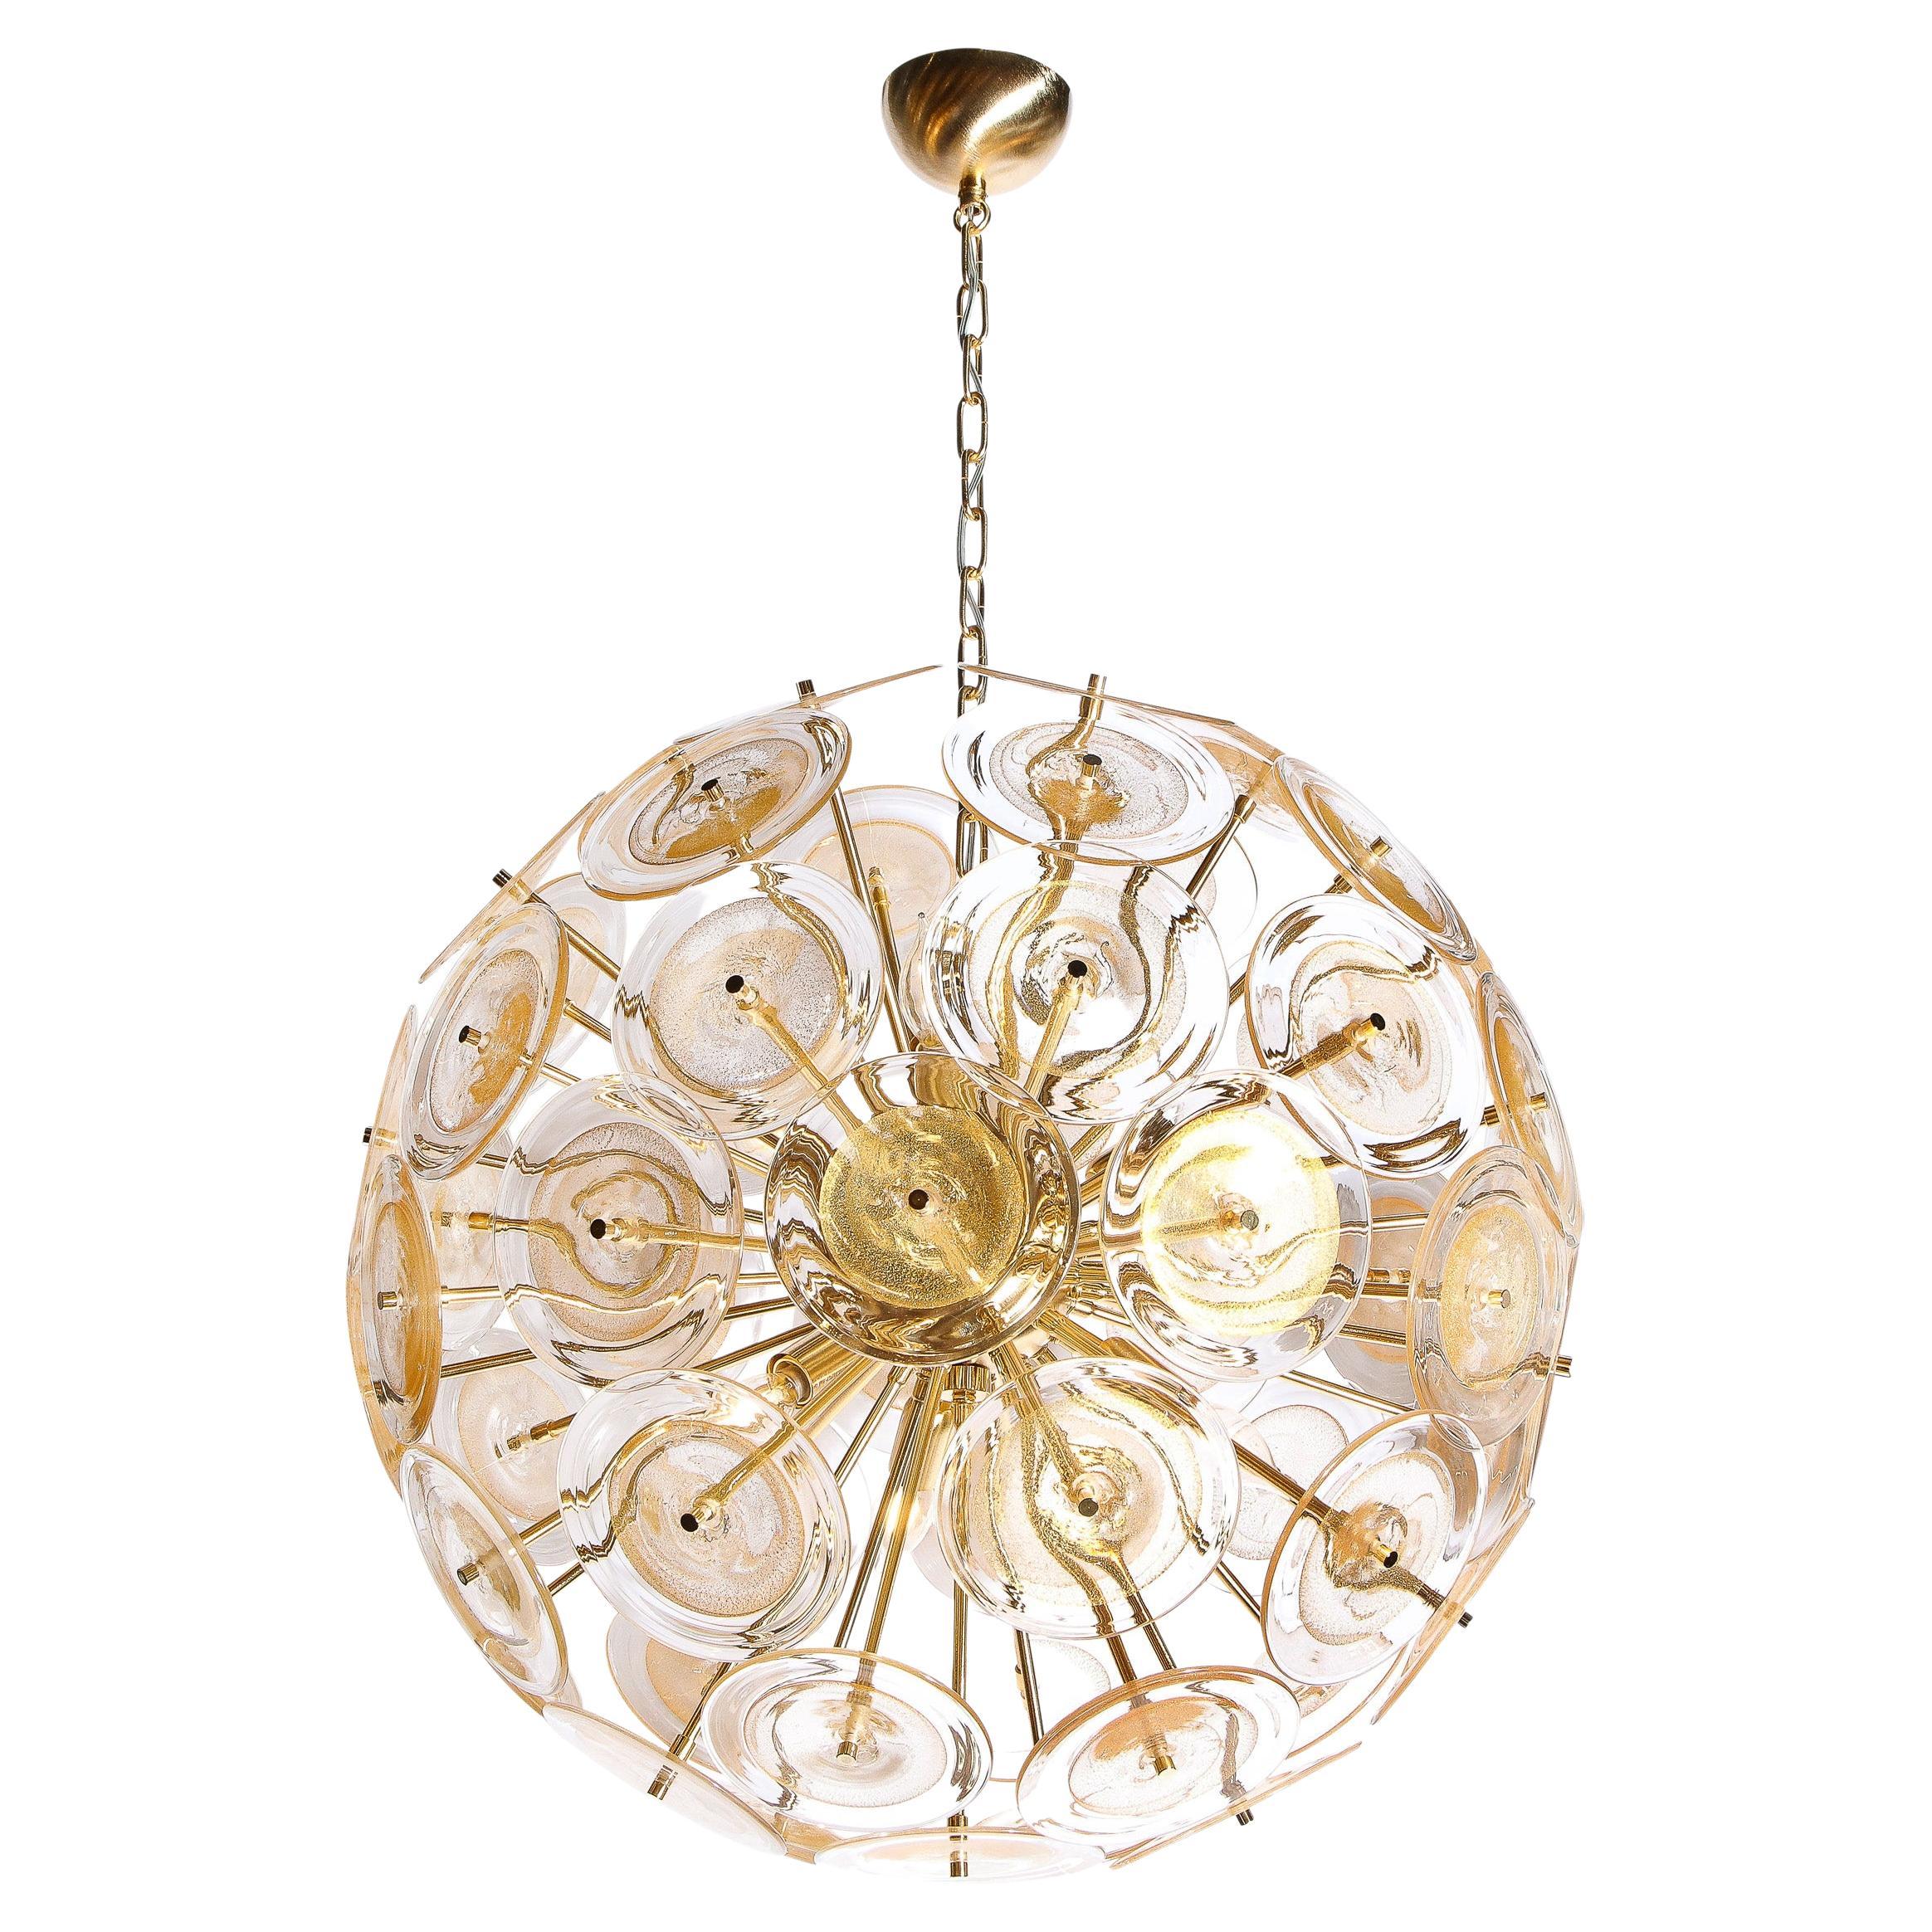 Modernist Brass Sputnik Chandelier W/ Handblown Translucent Murano Glass Discs